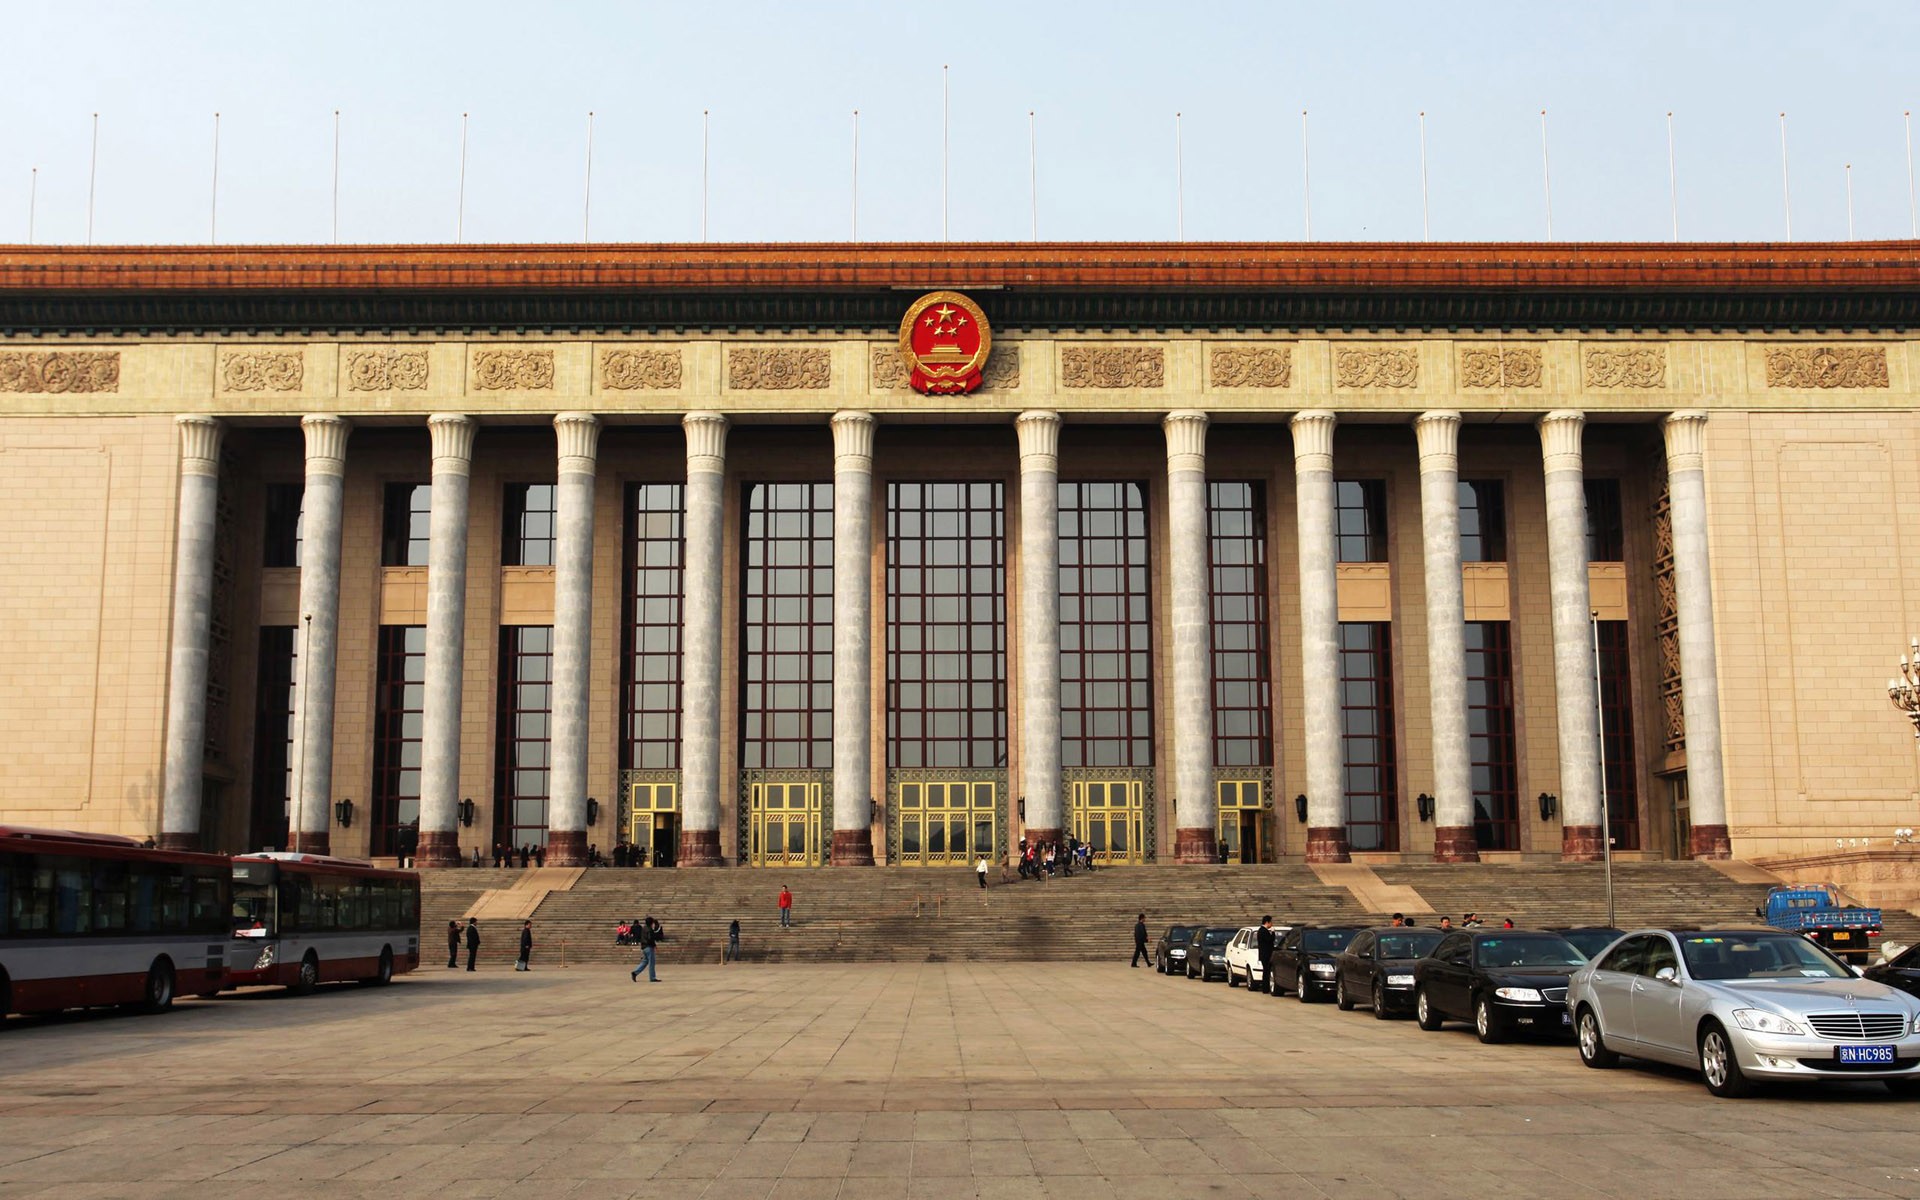 Beijing Tour - Great Hall (ggc works) #1 - 1920x1200